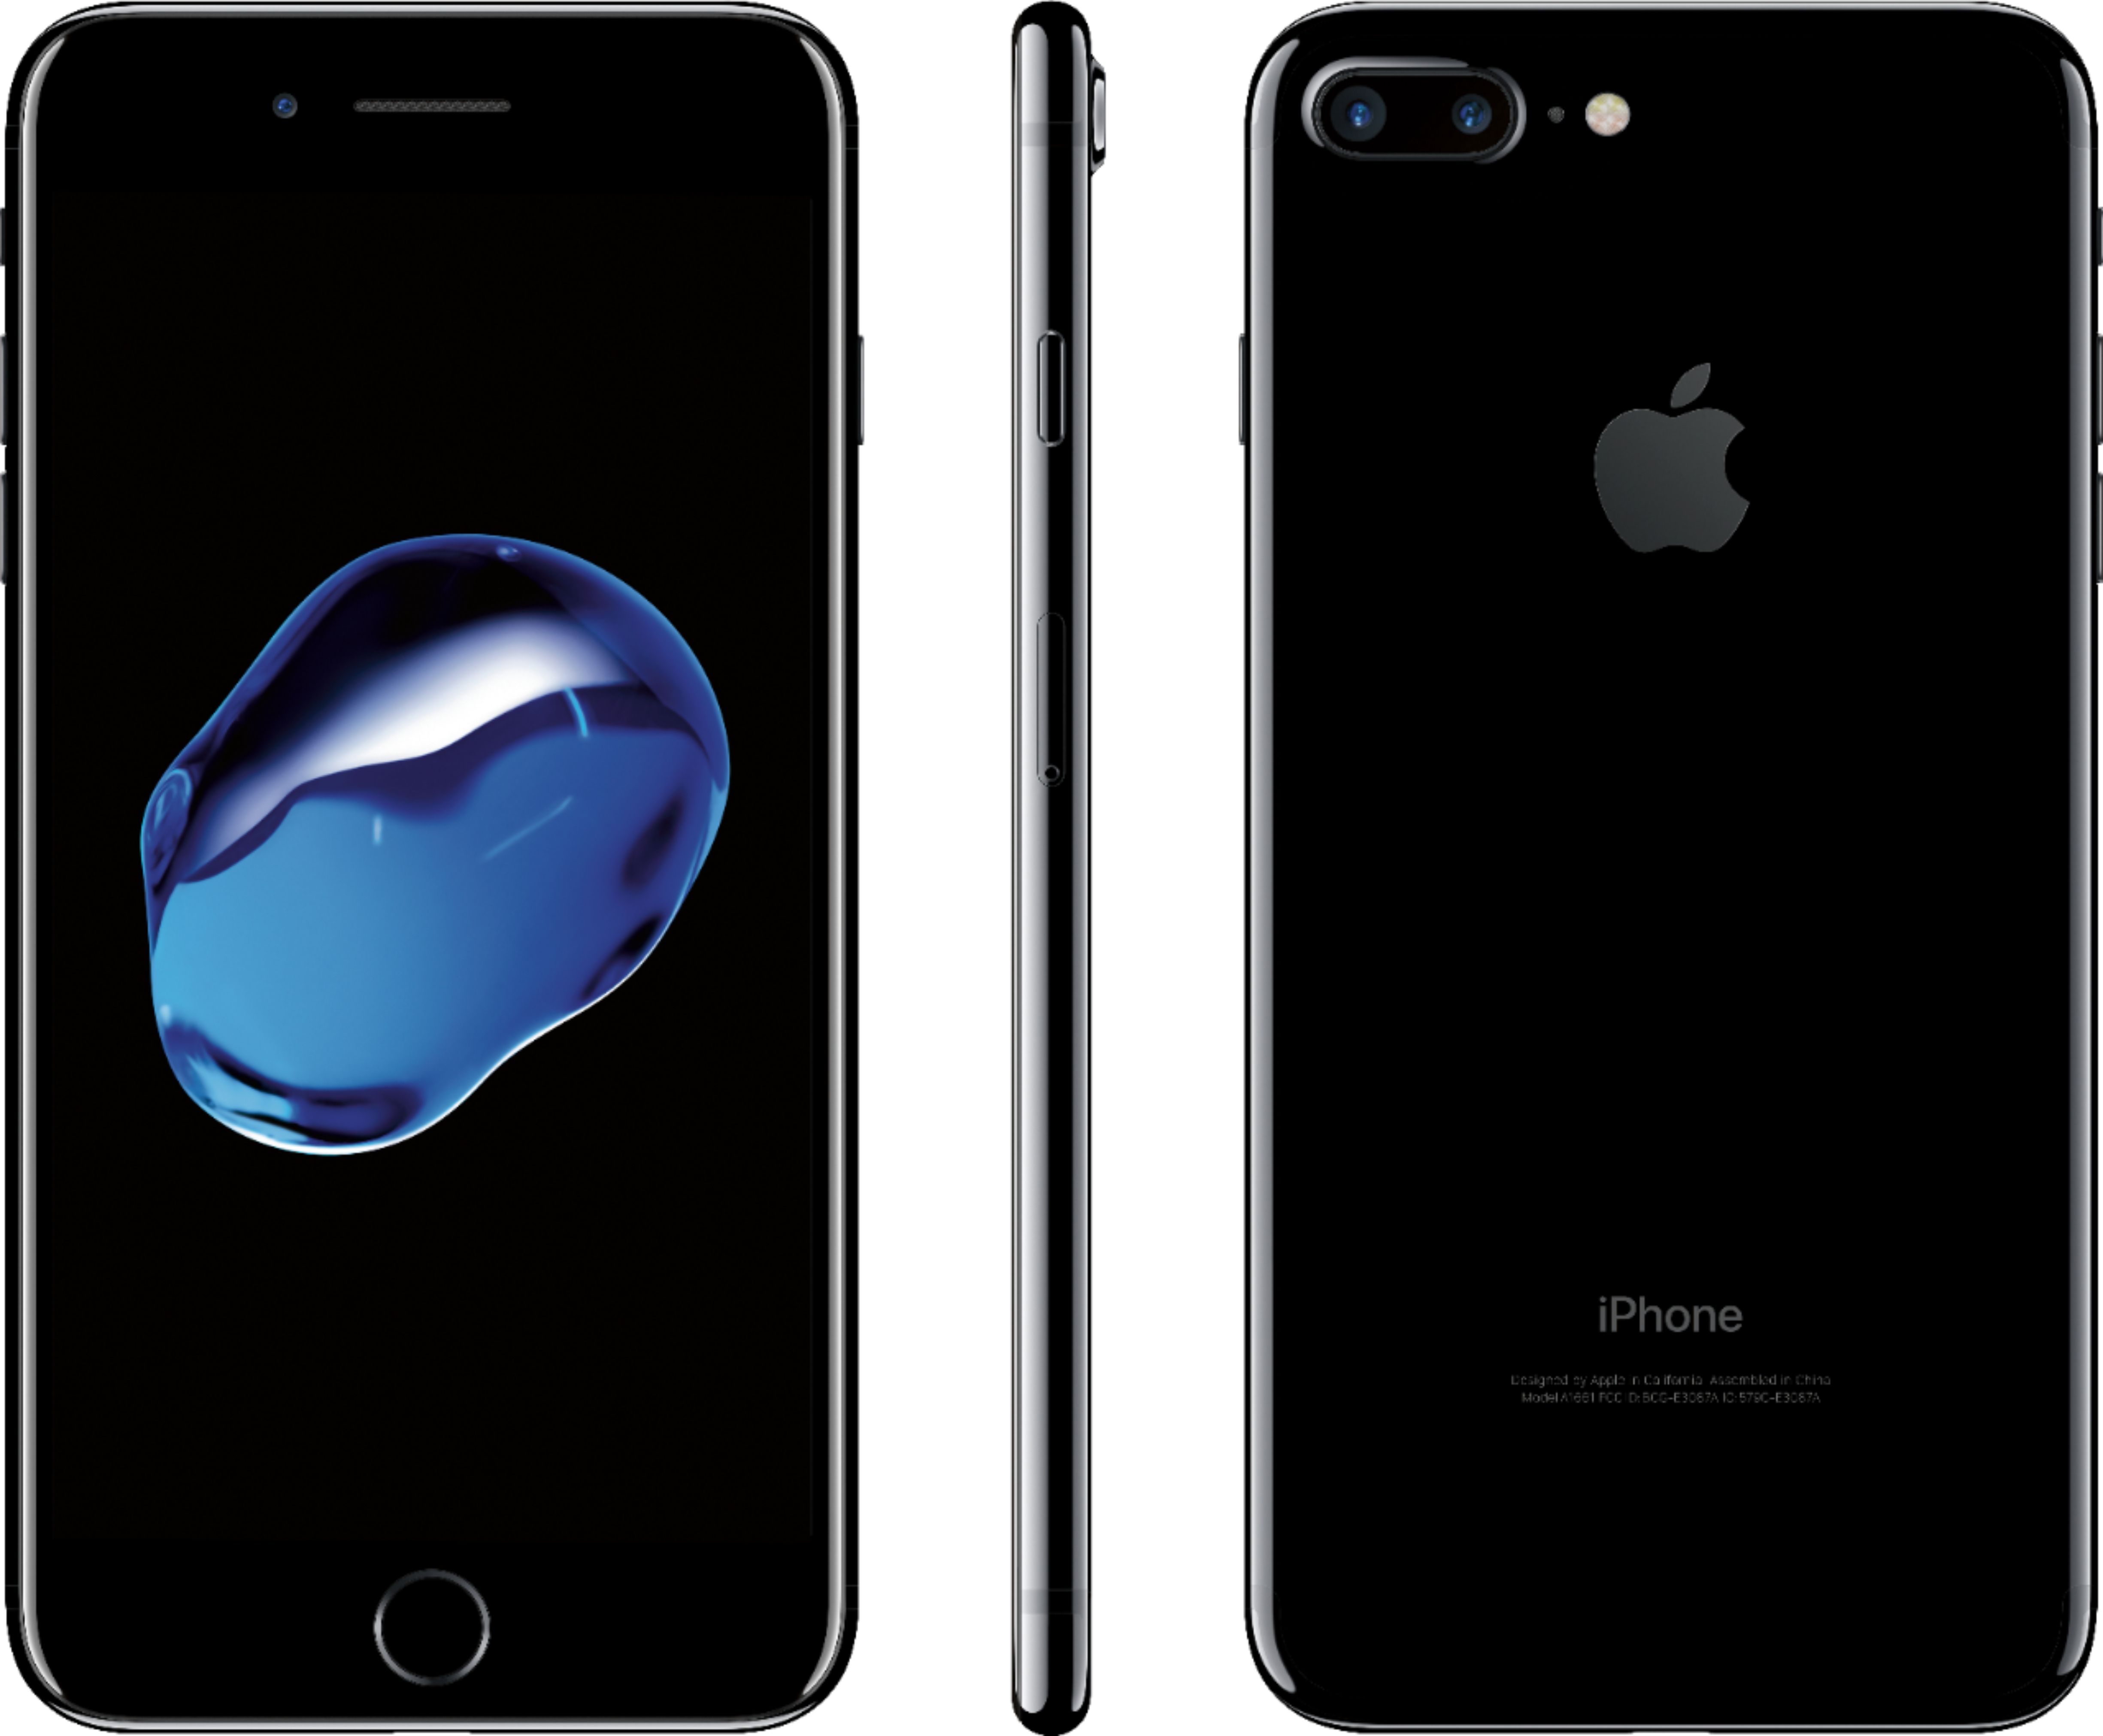 Apple iPhone 7 Plus 32GB Jet Black (Unlocked) MQU22LL/A - Best Buy